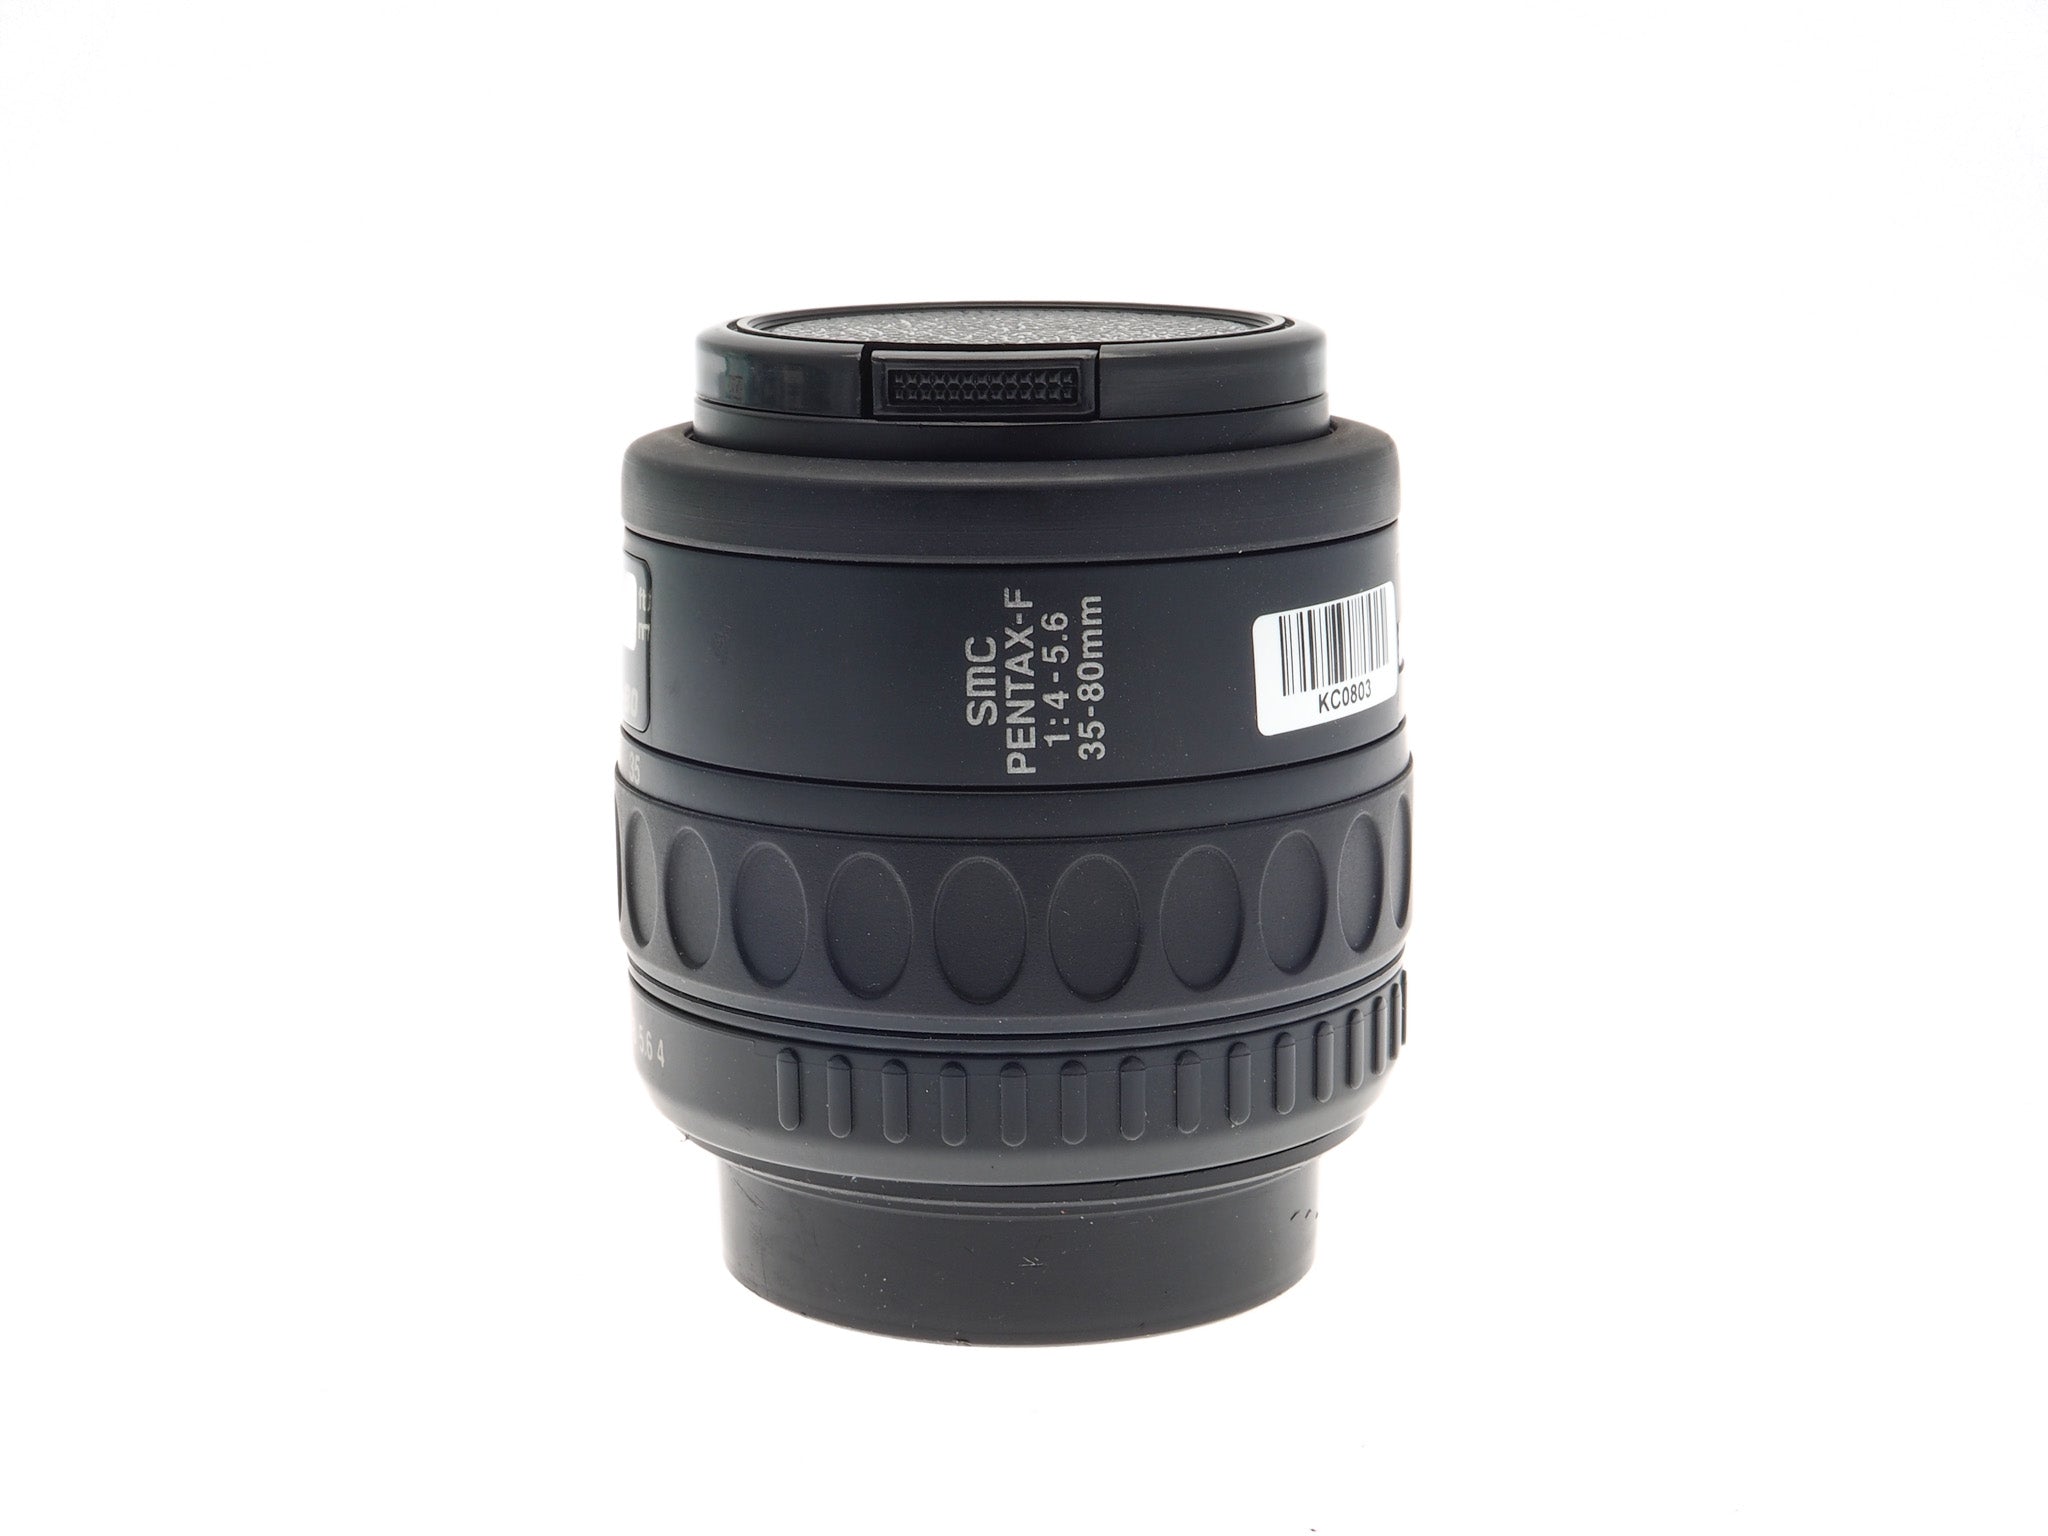 Pentax 35-80mm f4-5.6 SMC Pentax-F - Lens